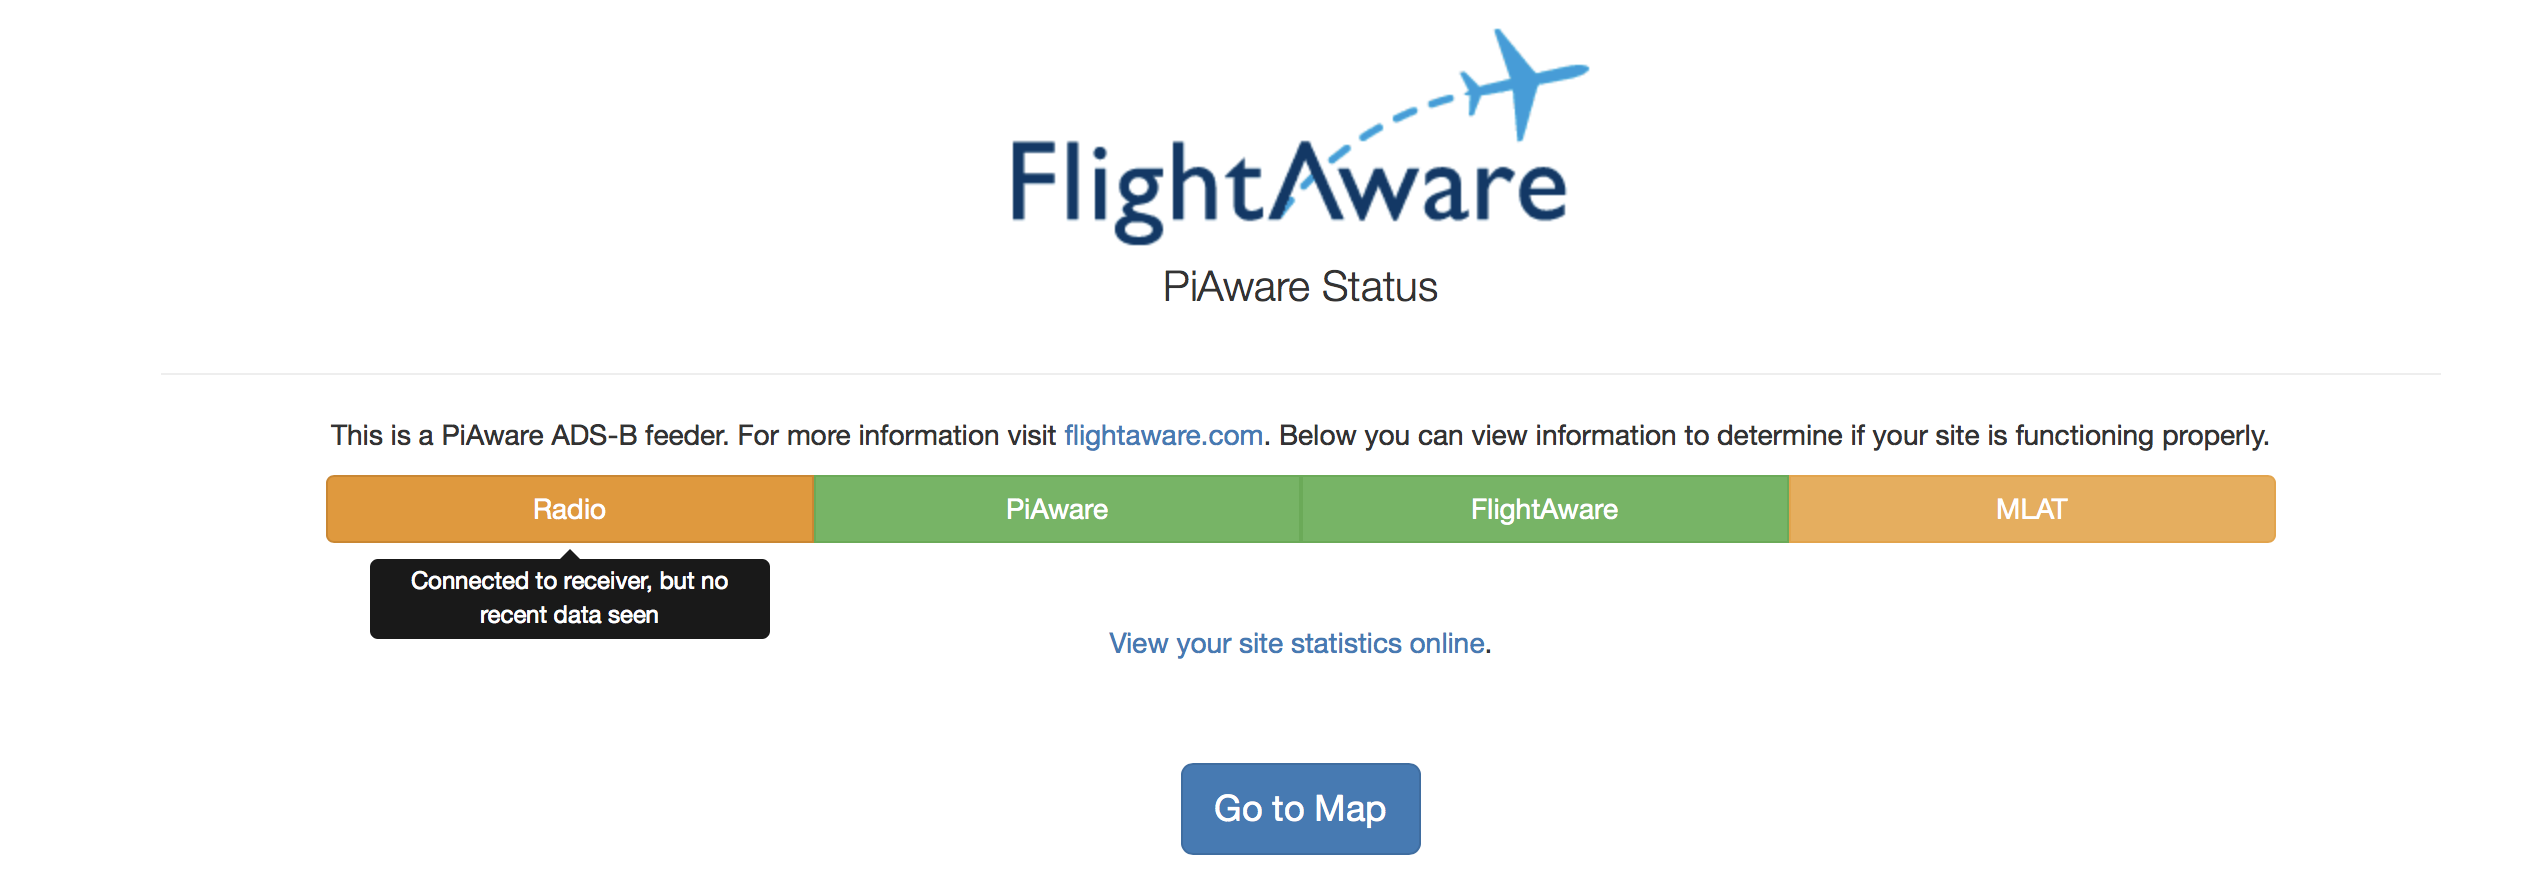 FlightAware Radio failed